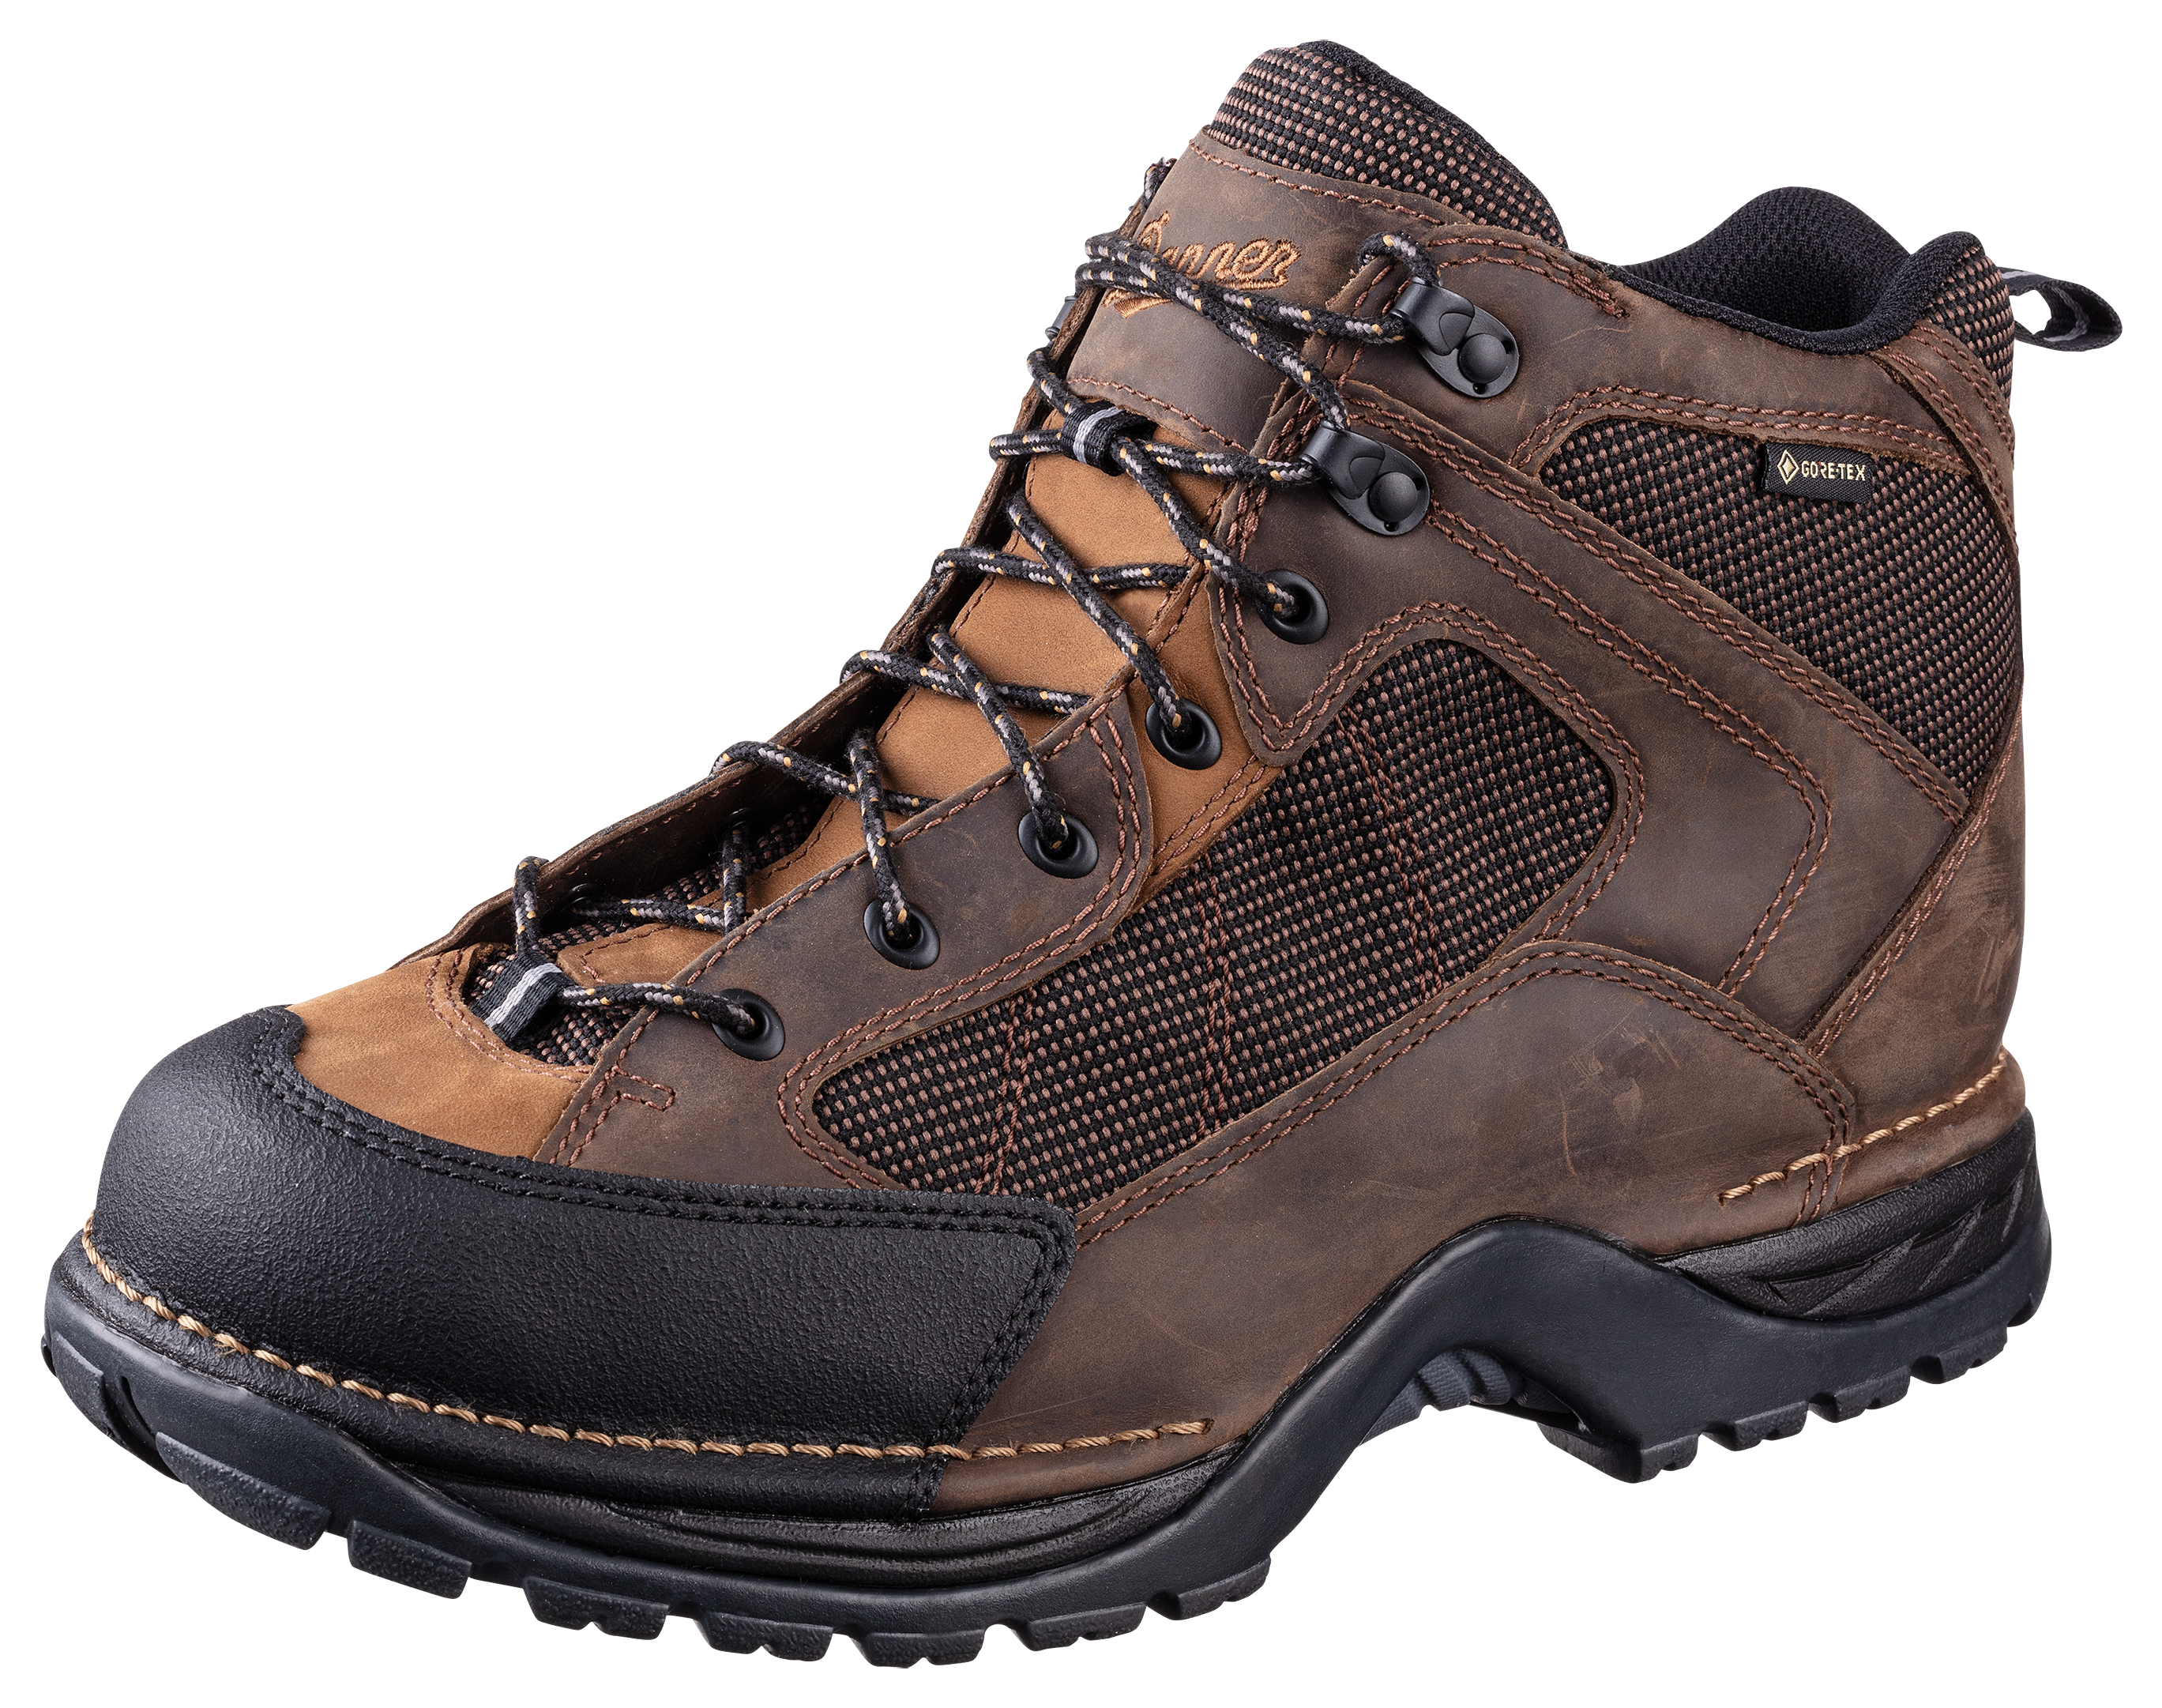 Danner Radical 452 GORE-TEX Hiking Boots for Men - Dark Brown - 10W